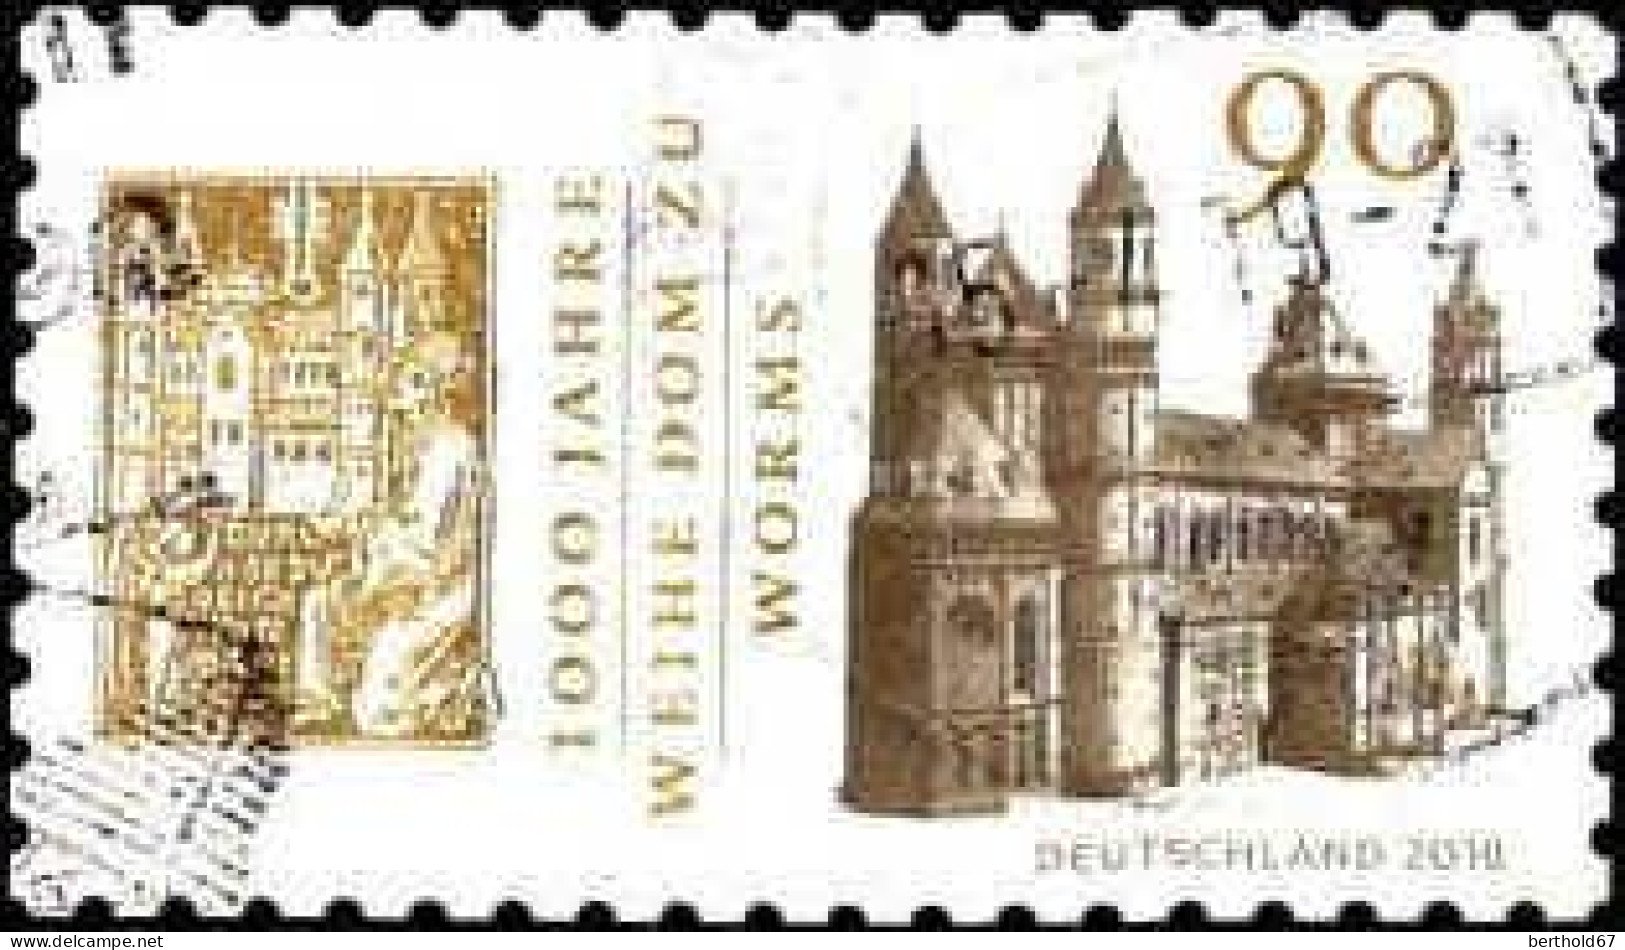 RFA Poste Obl Yv:3175 Mi:3394 1000 Jahre Weihe Dom Zu Worms (cachet Rond) - Used Stamps